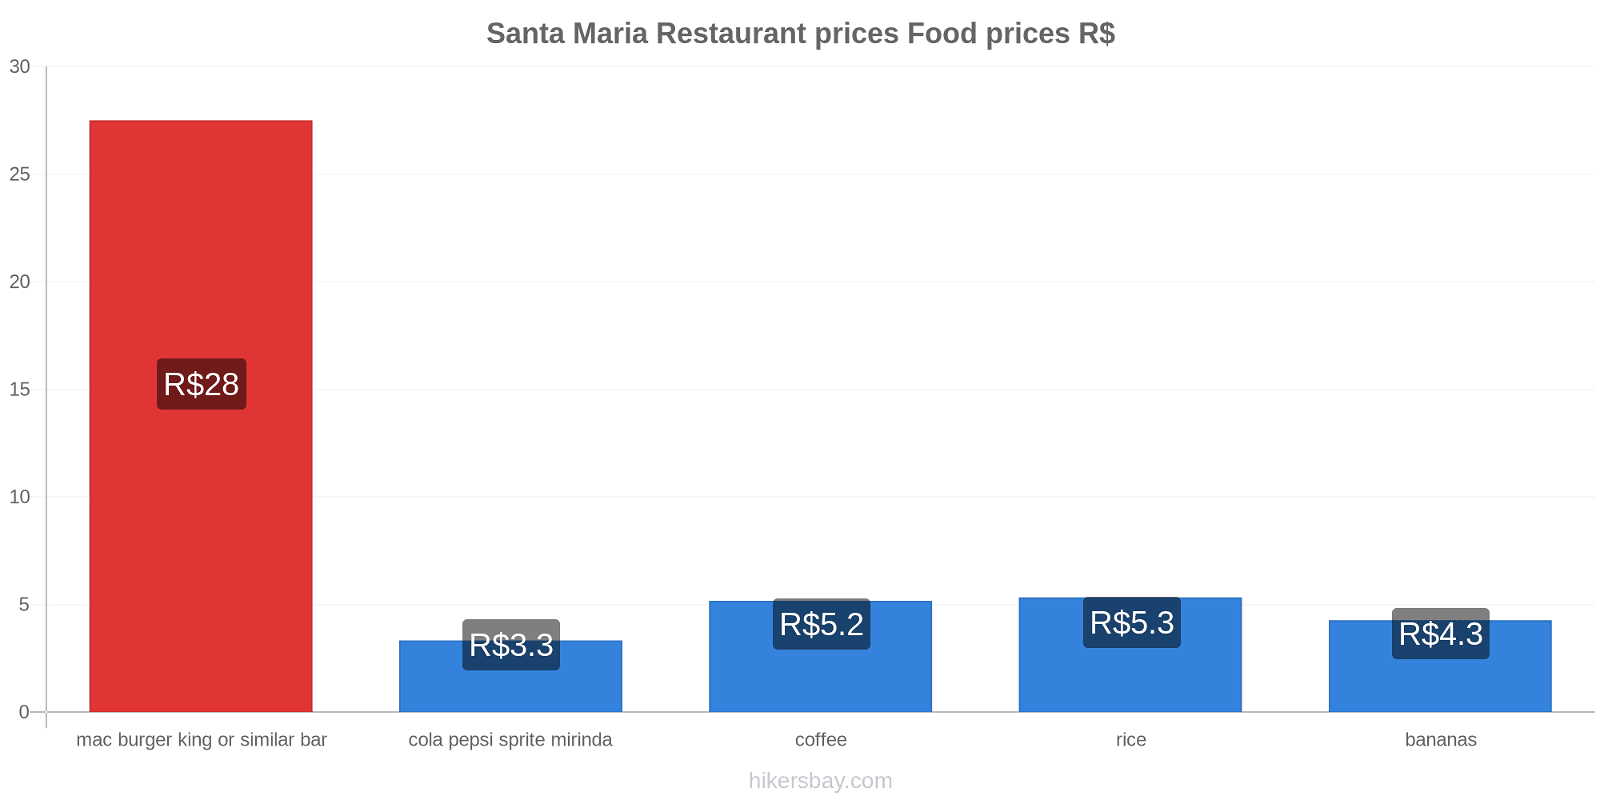 Santa Maria price changes hikersbay.com